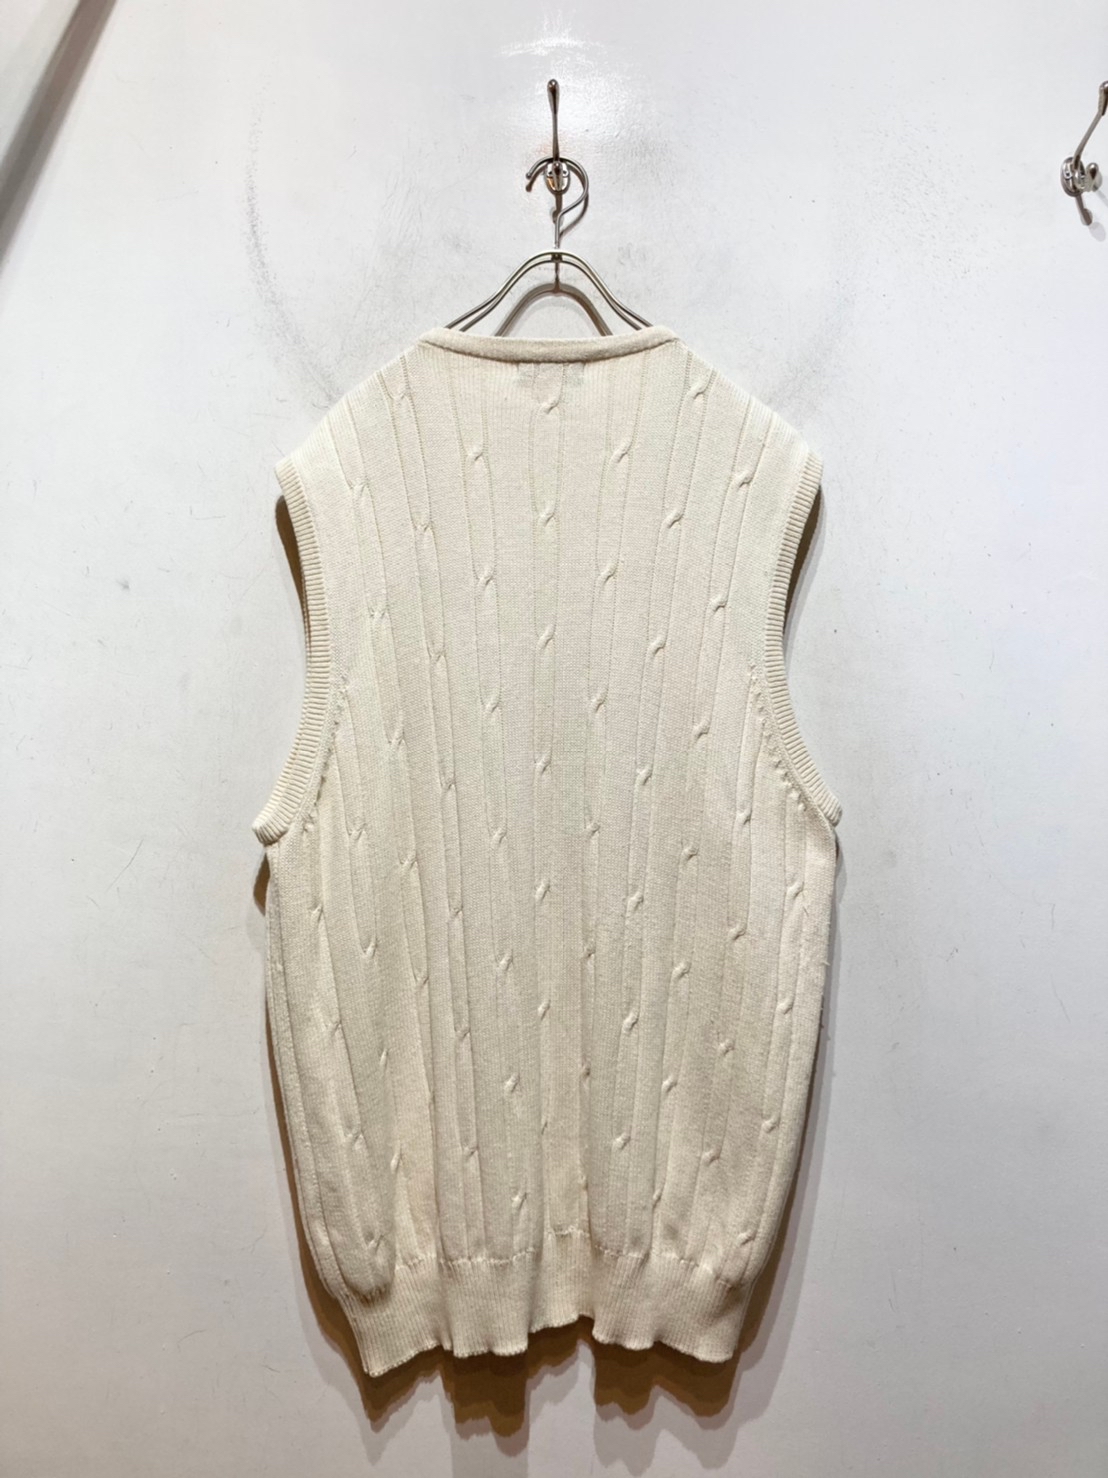 "BROOKLINE GOLF CLUB” Cotton Knit Vest